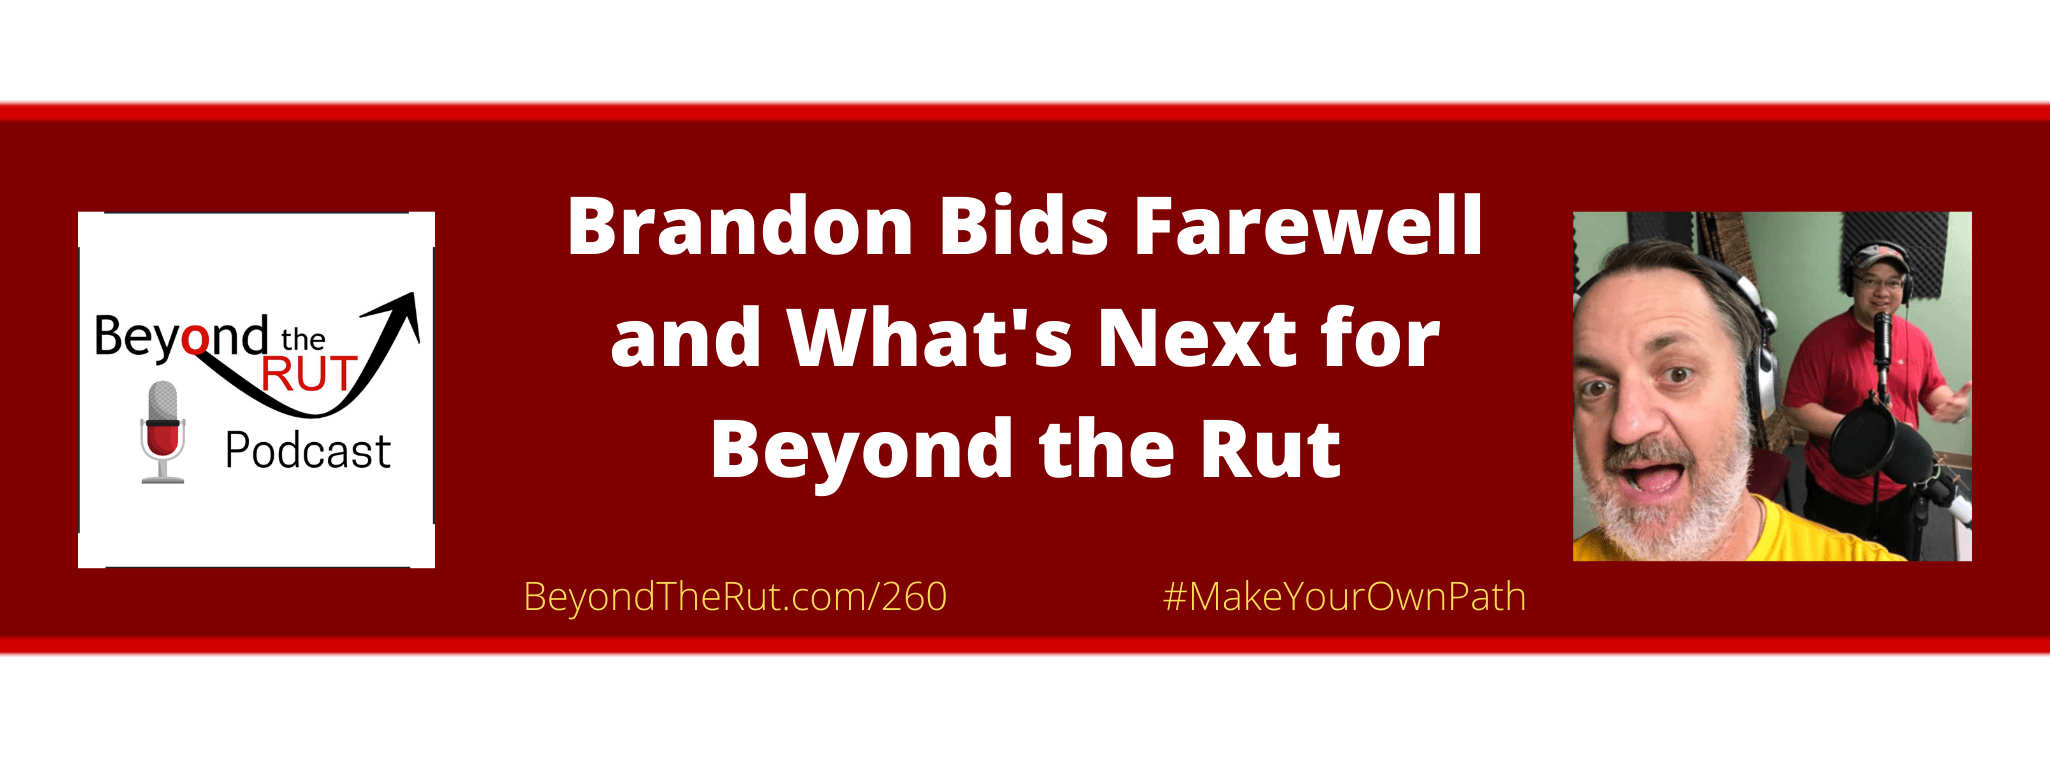 Brandon bids farewell to Beyond the Rut